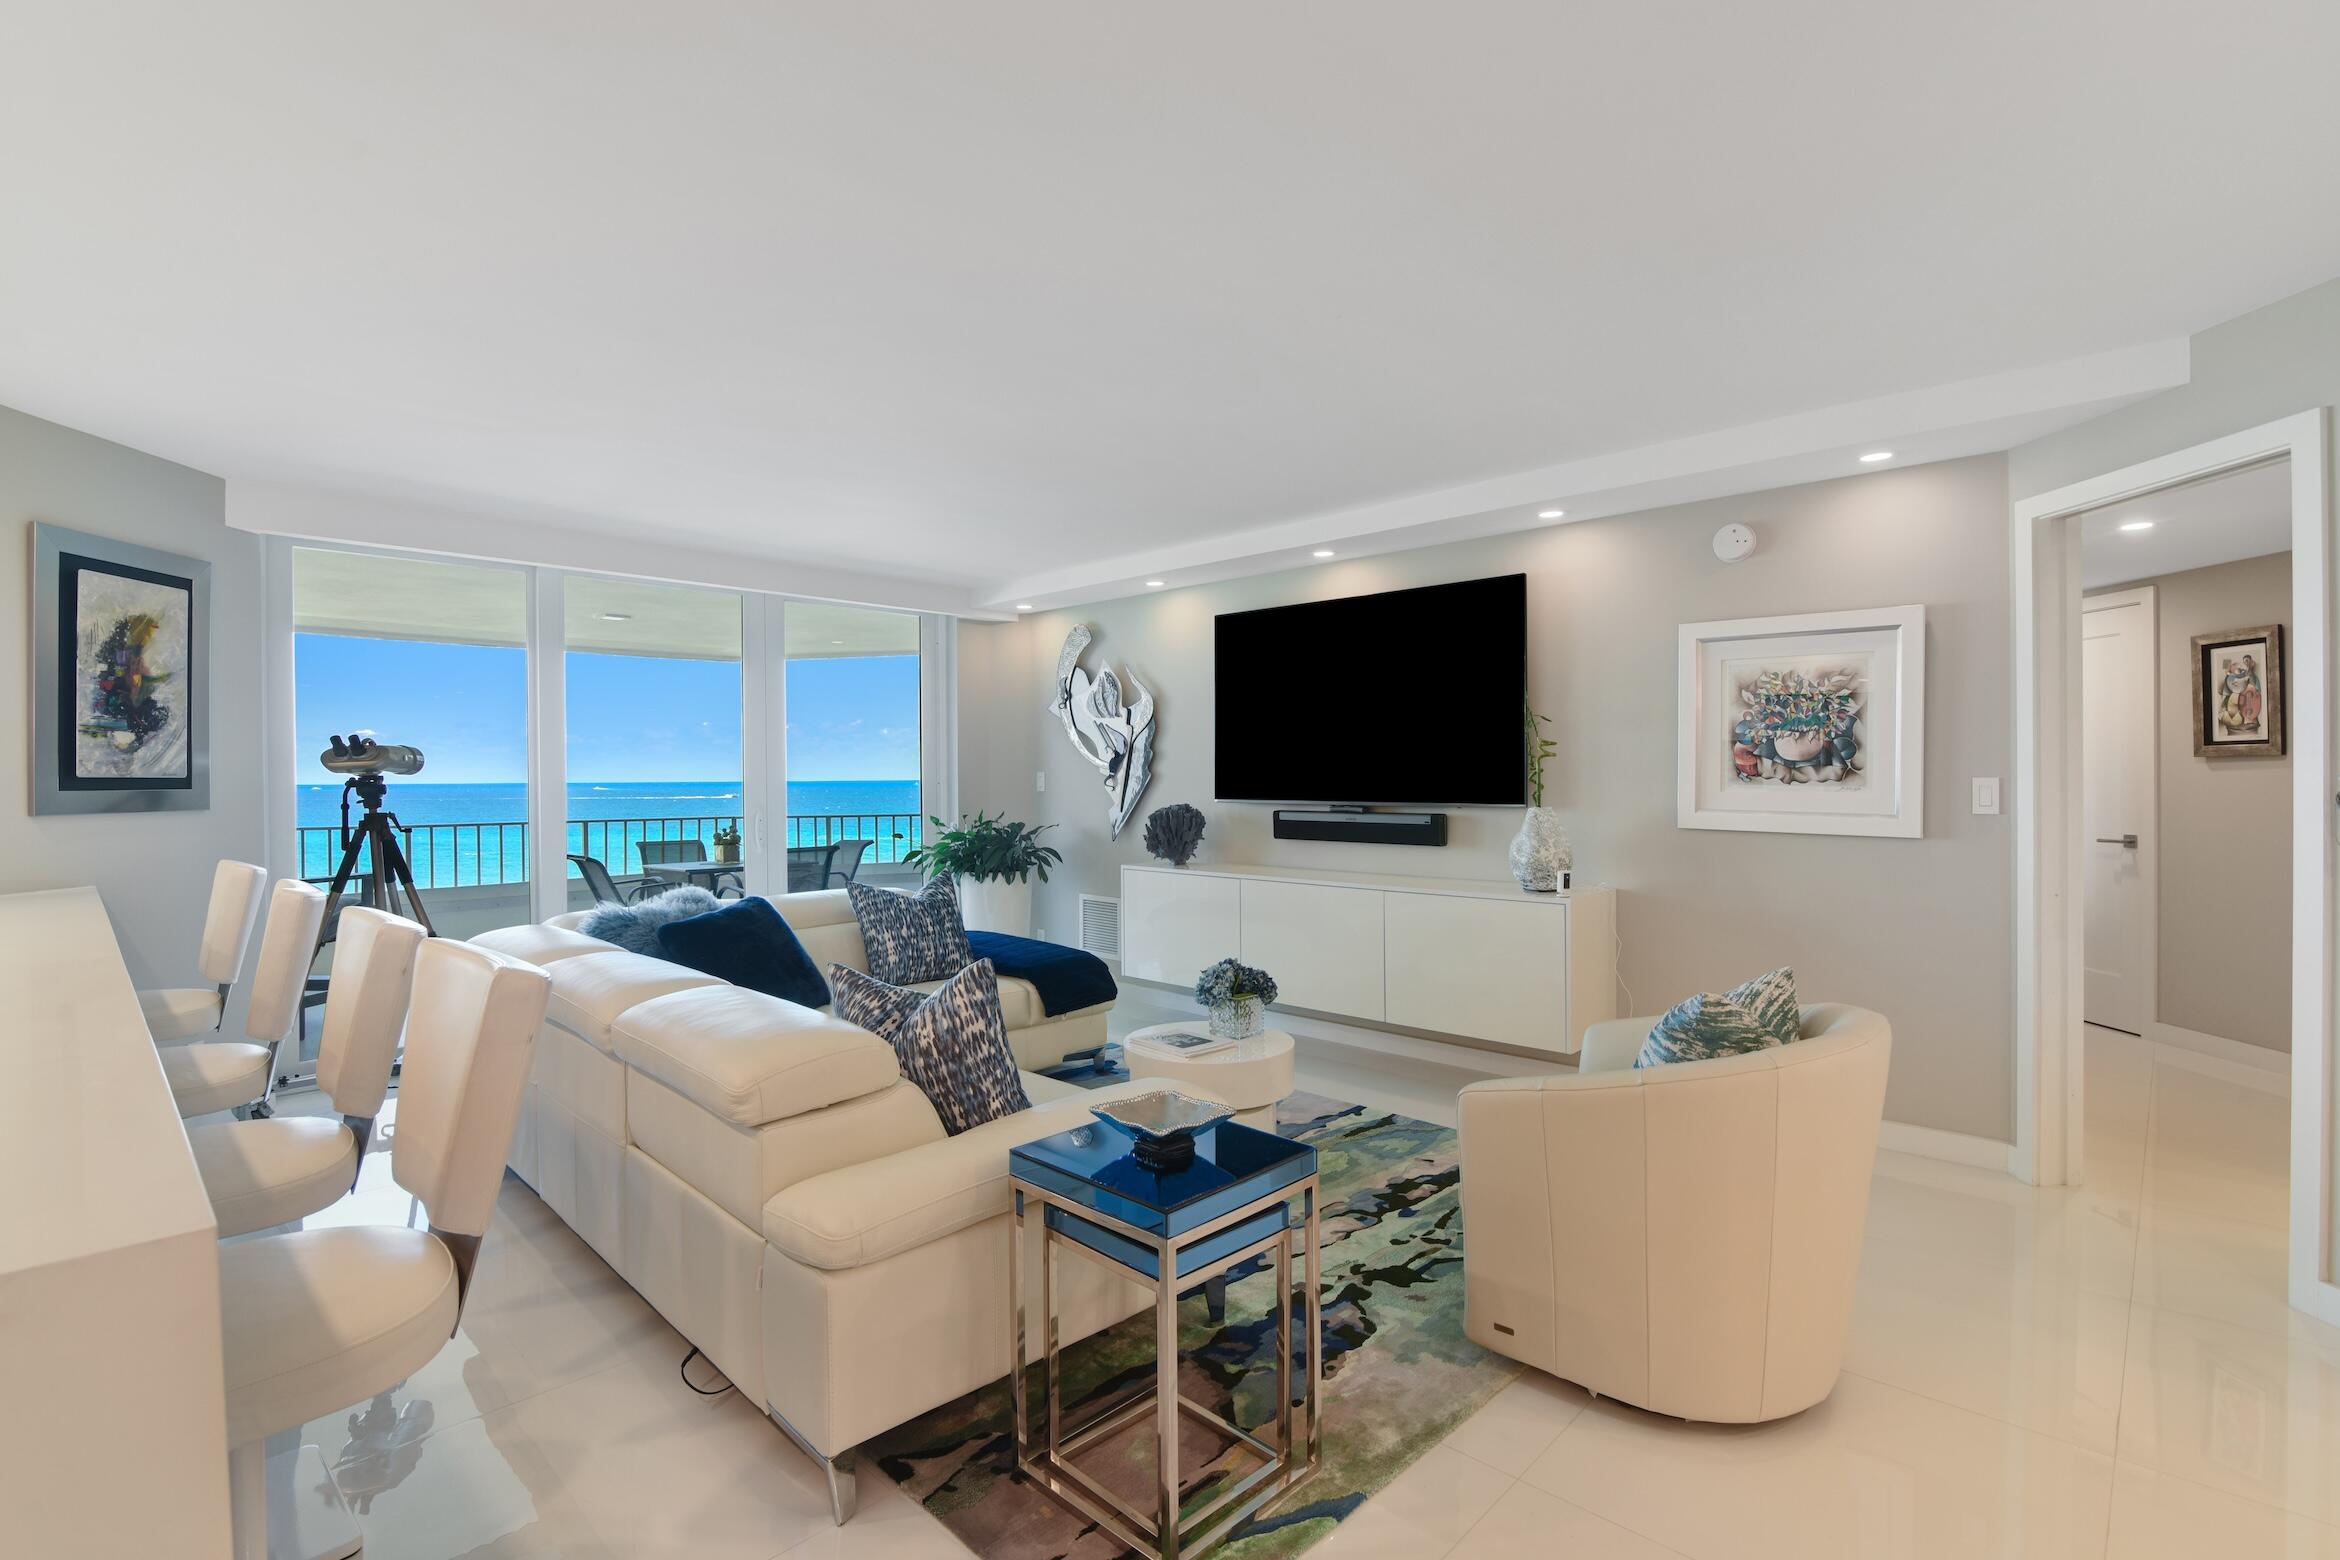 Property for Sale at 550 S Ocean Boulevard 605, Boca Raton, Palm Beach County, Florida - Bedrooms: 2 
Bathrooms: 2  - $2,100,000